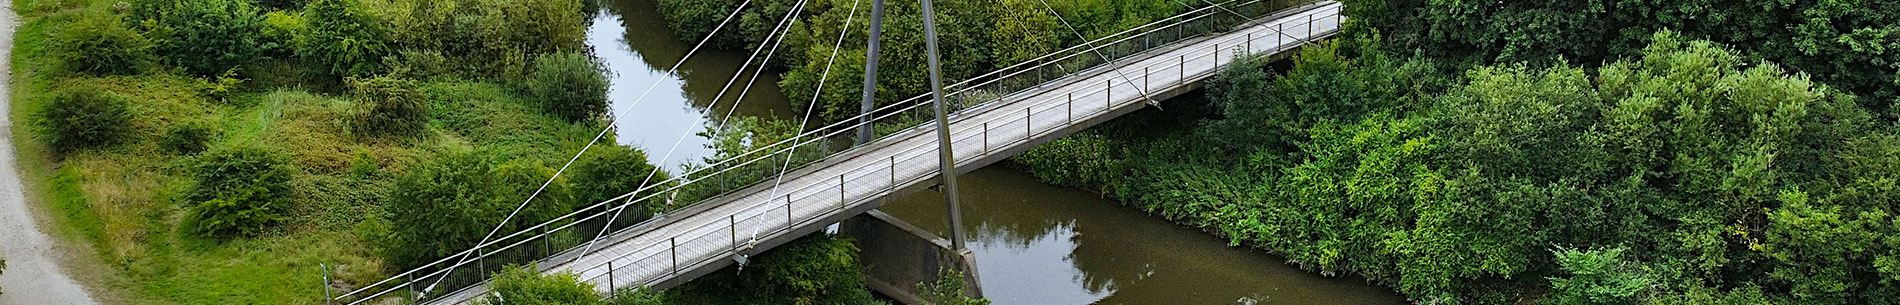 bridge with greenery banner